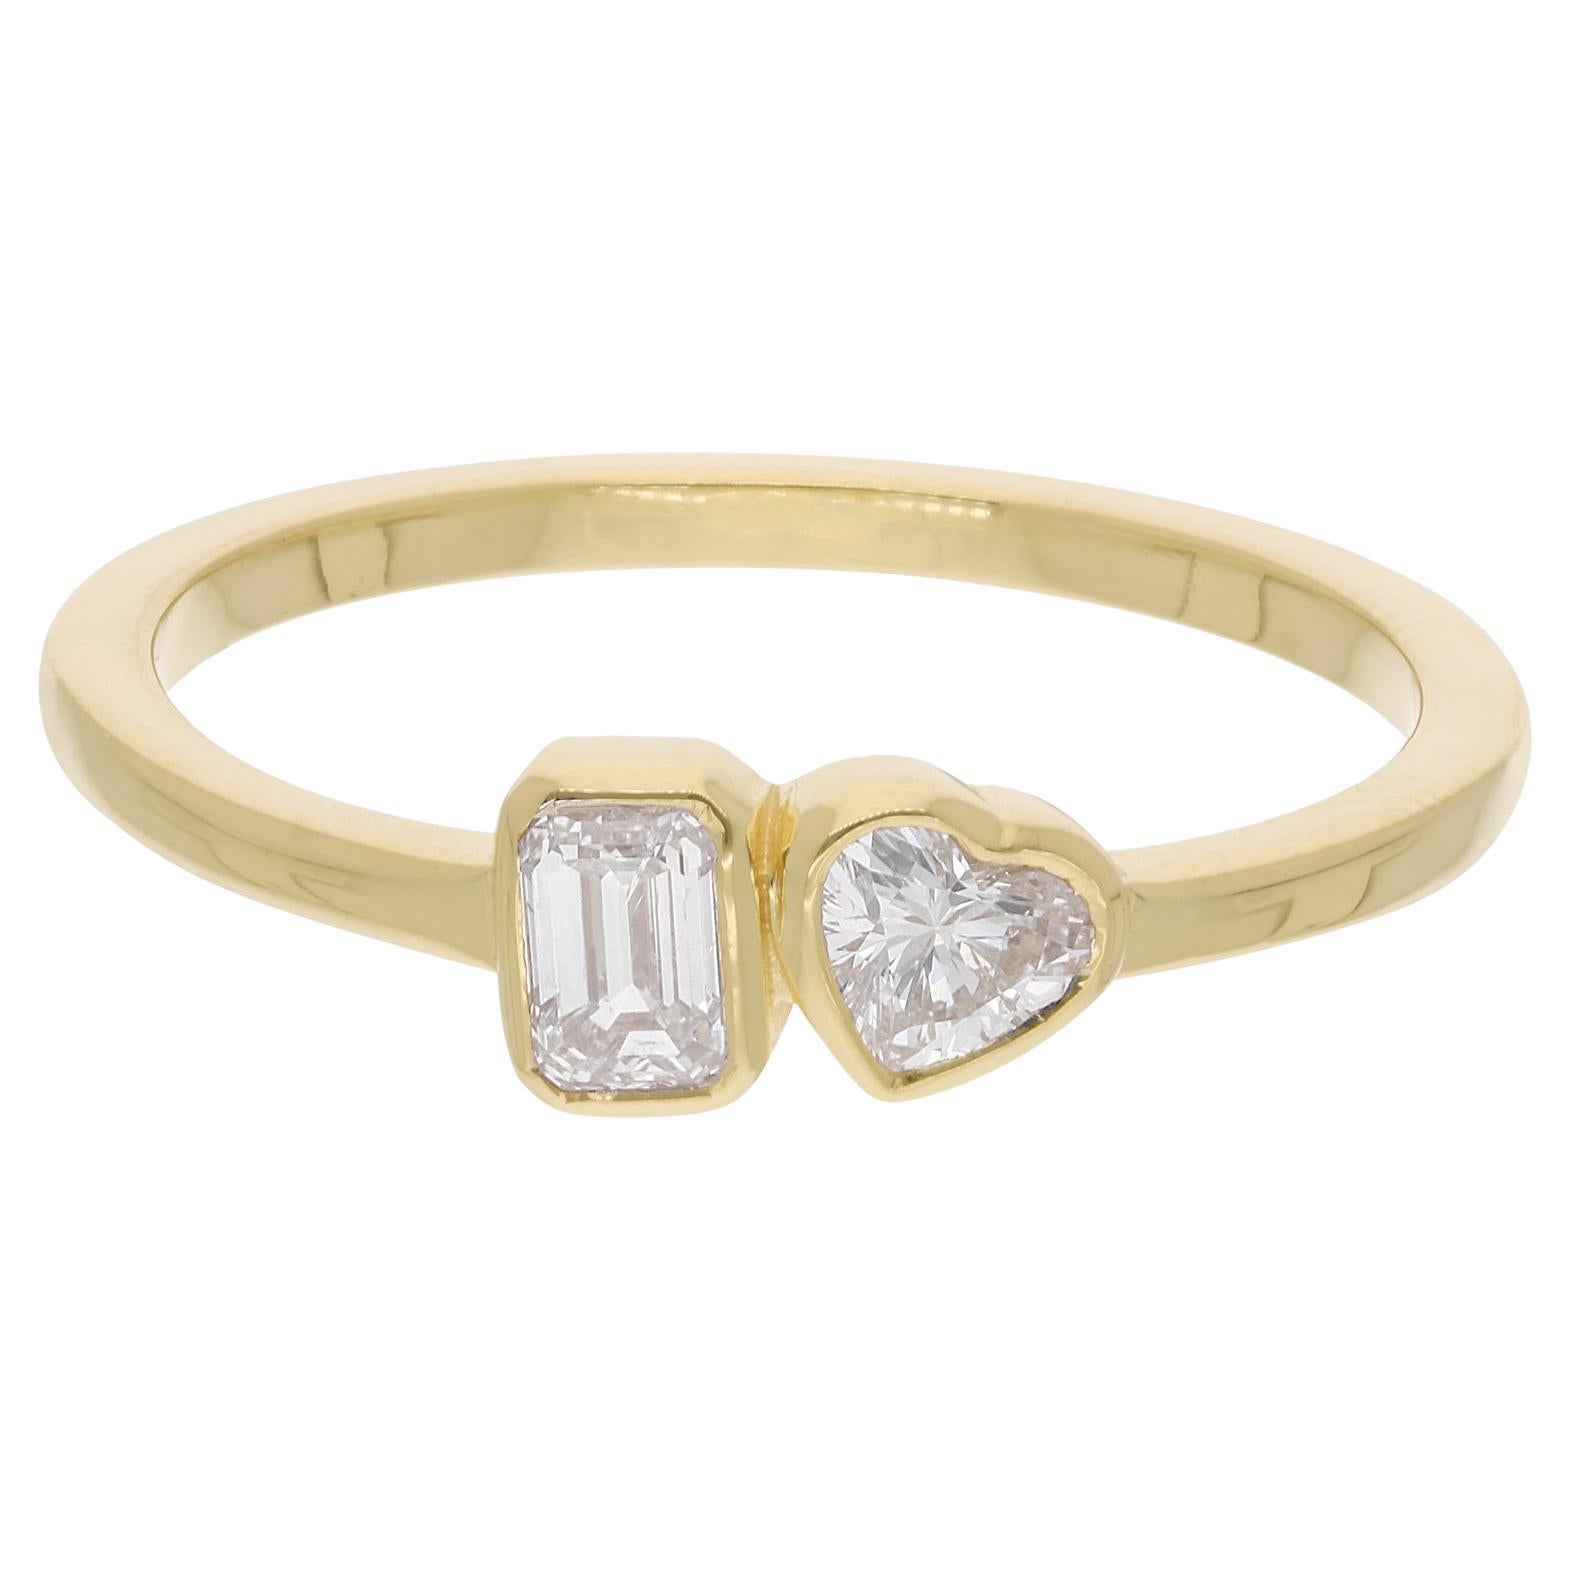 0.54 Carat Heart & Emerald Cut Diamond Ring 14 Karat Yellow Gold Fine Jewelry For Sale